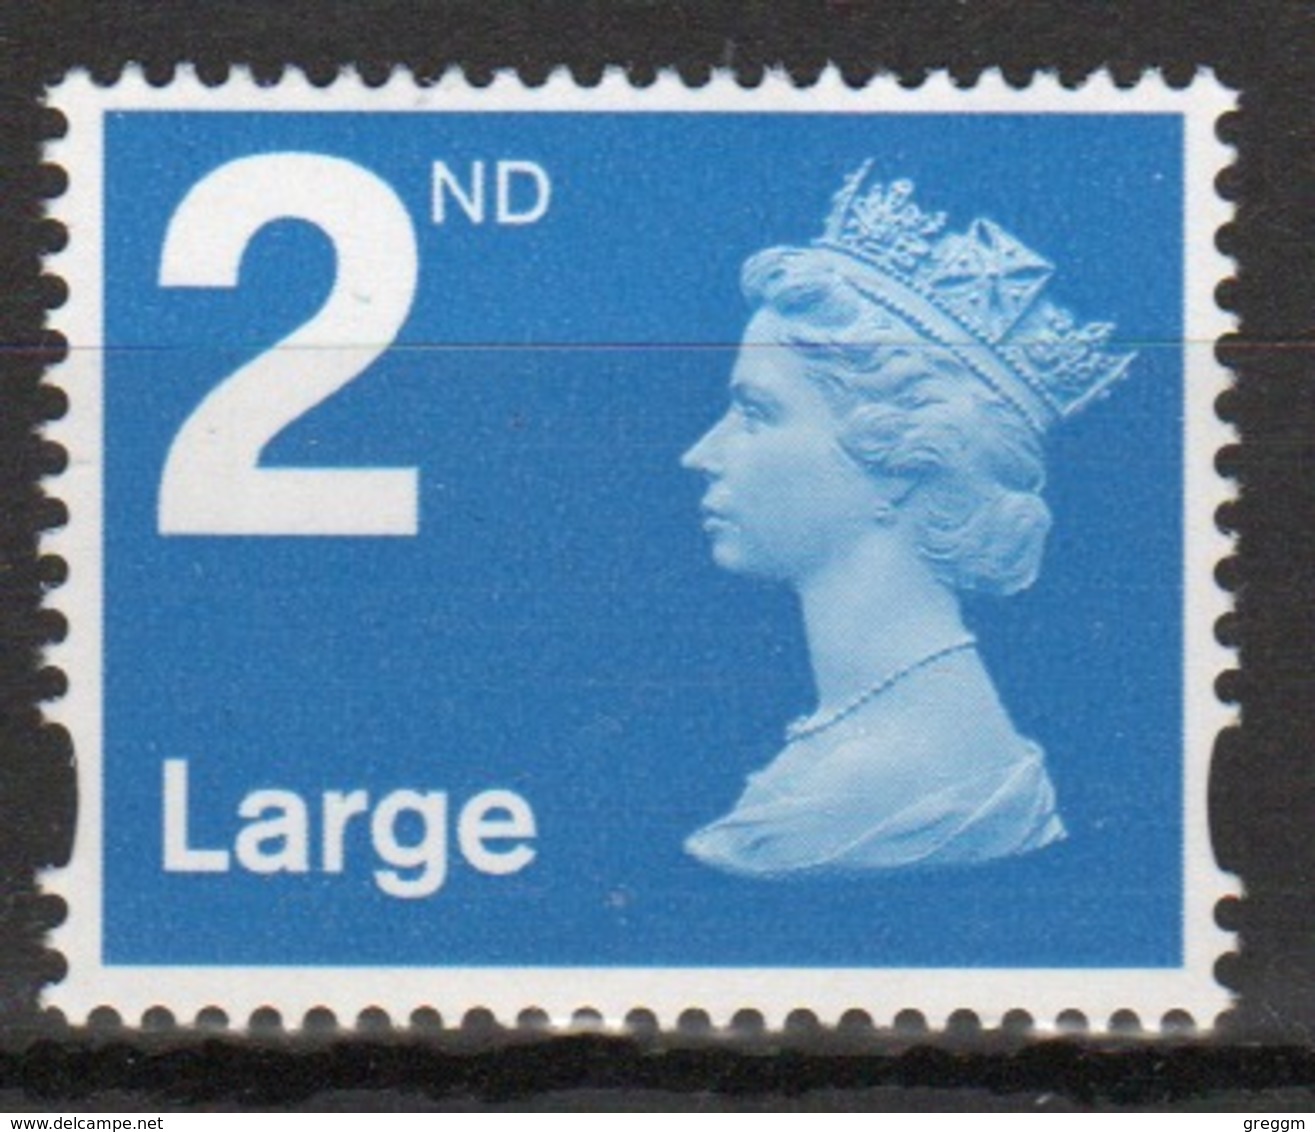 Great Britain 2006 Decimal Machin 2nd Large Définitive Stamp. - Neufs